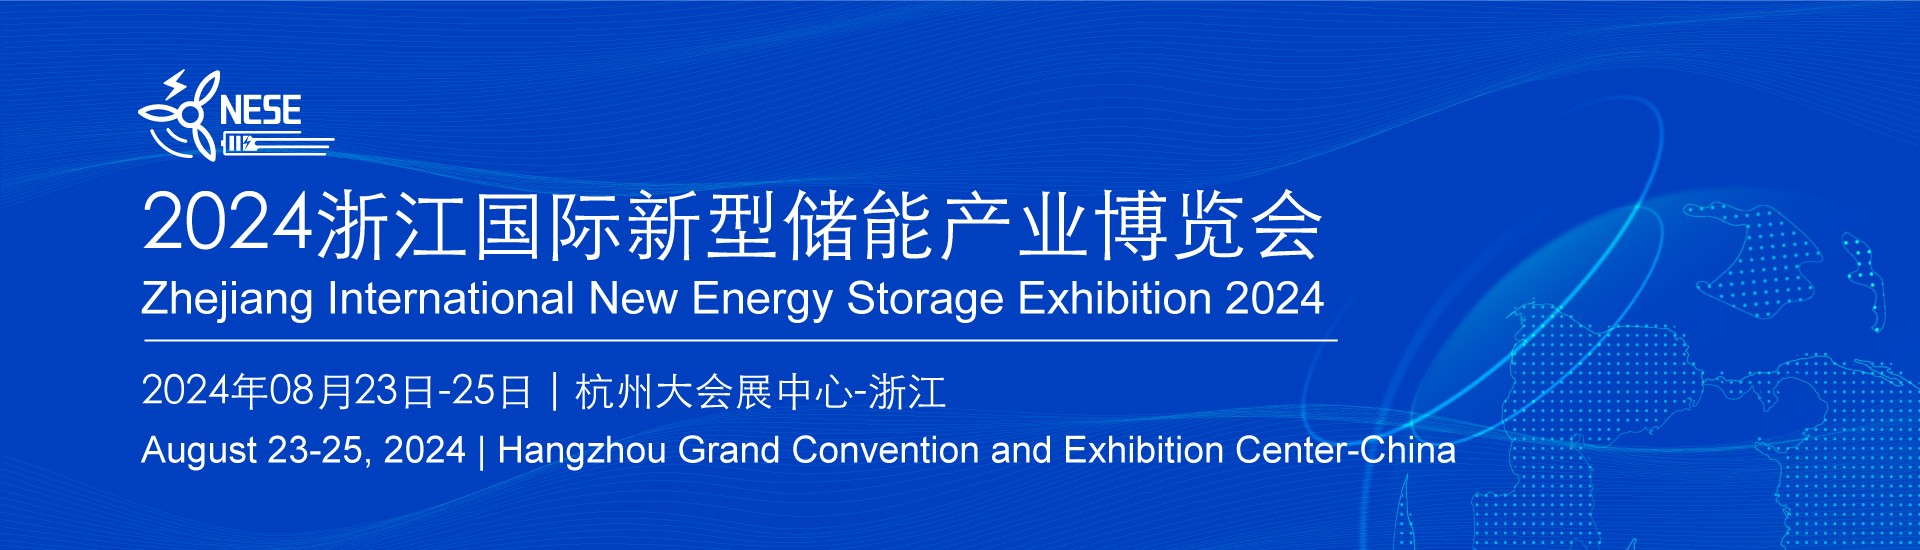 Zhejiang International New Energy Storage Exhibition 2024